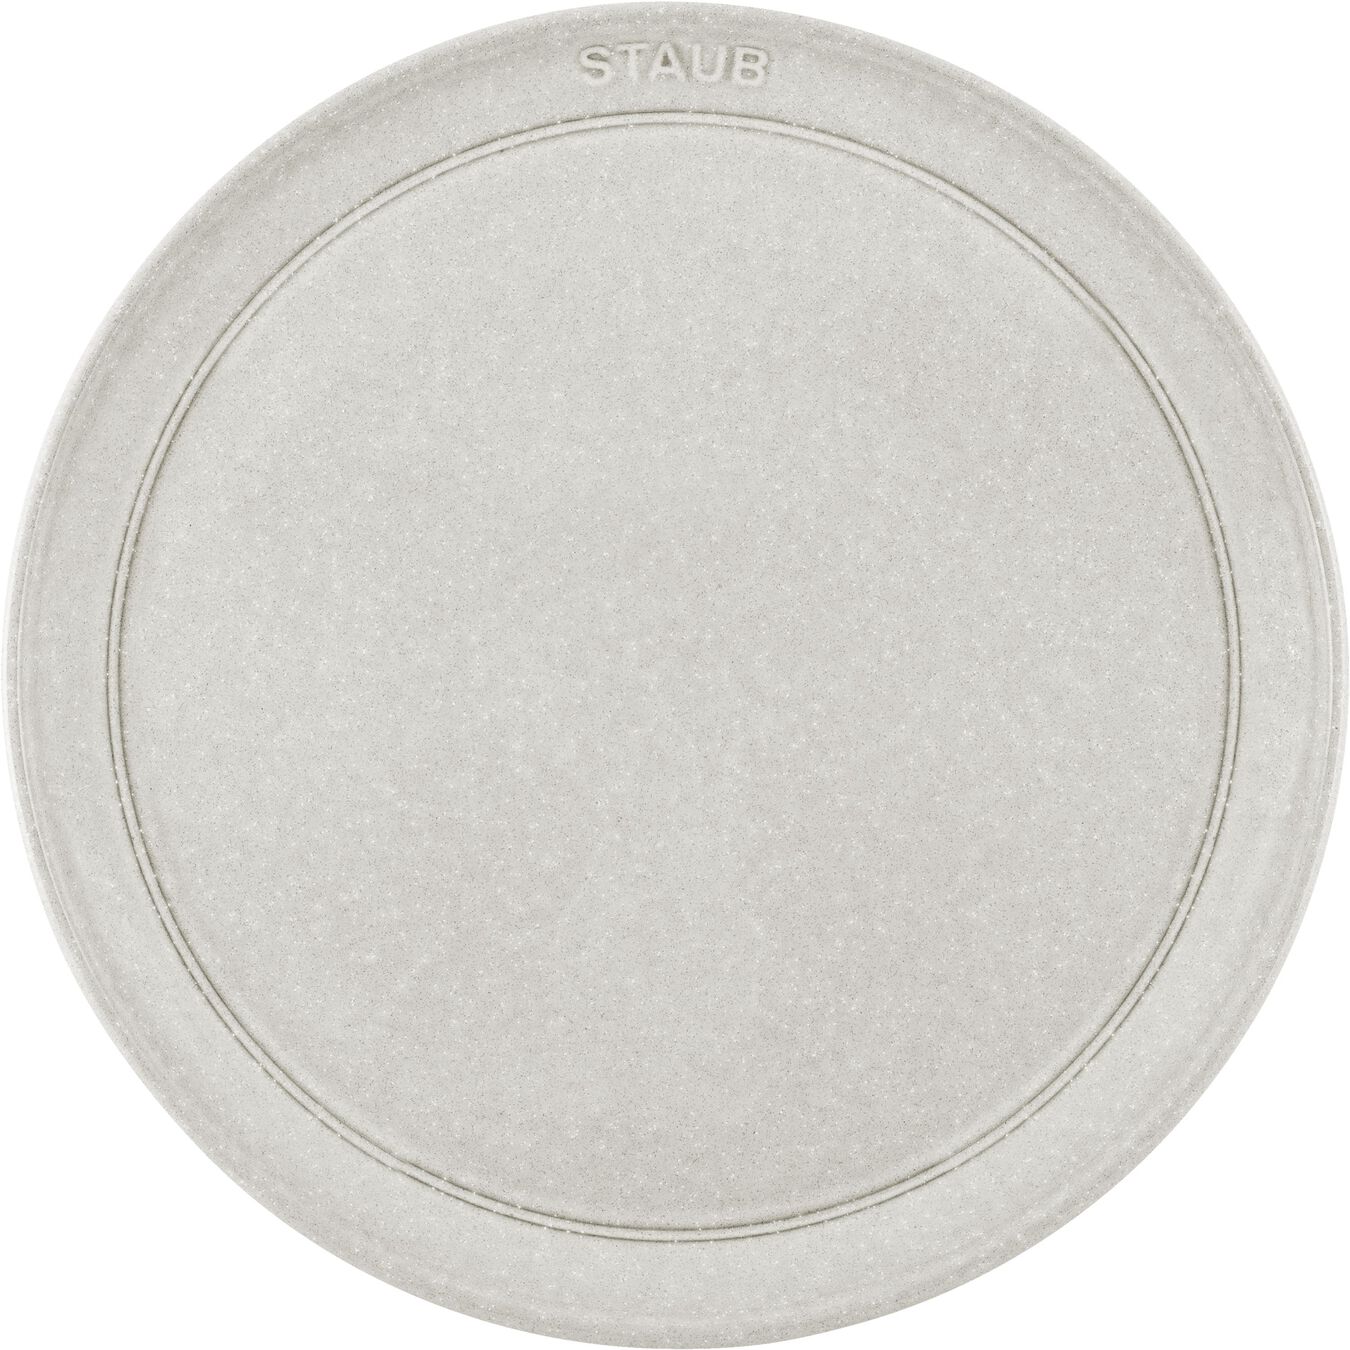 Prato plano 26 cm, Cerâmica, Branco trufado,,large 2